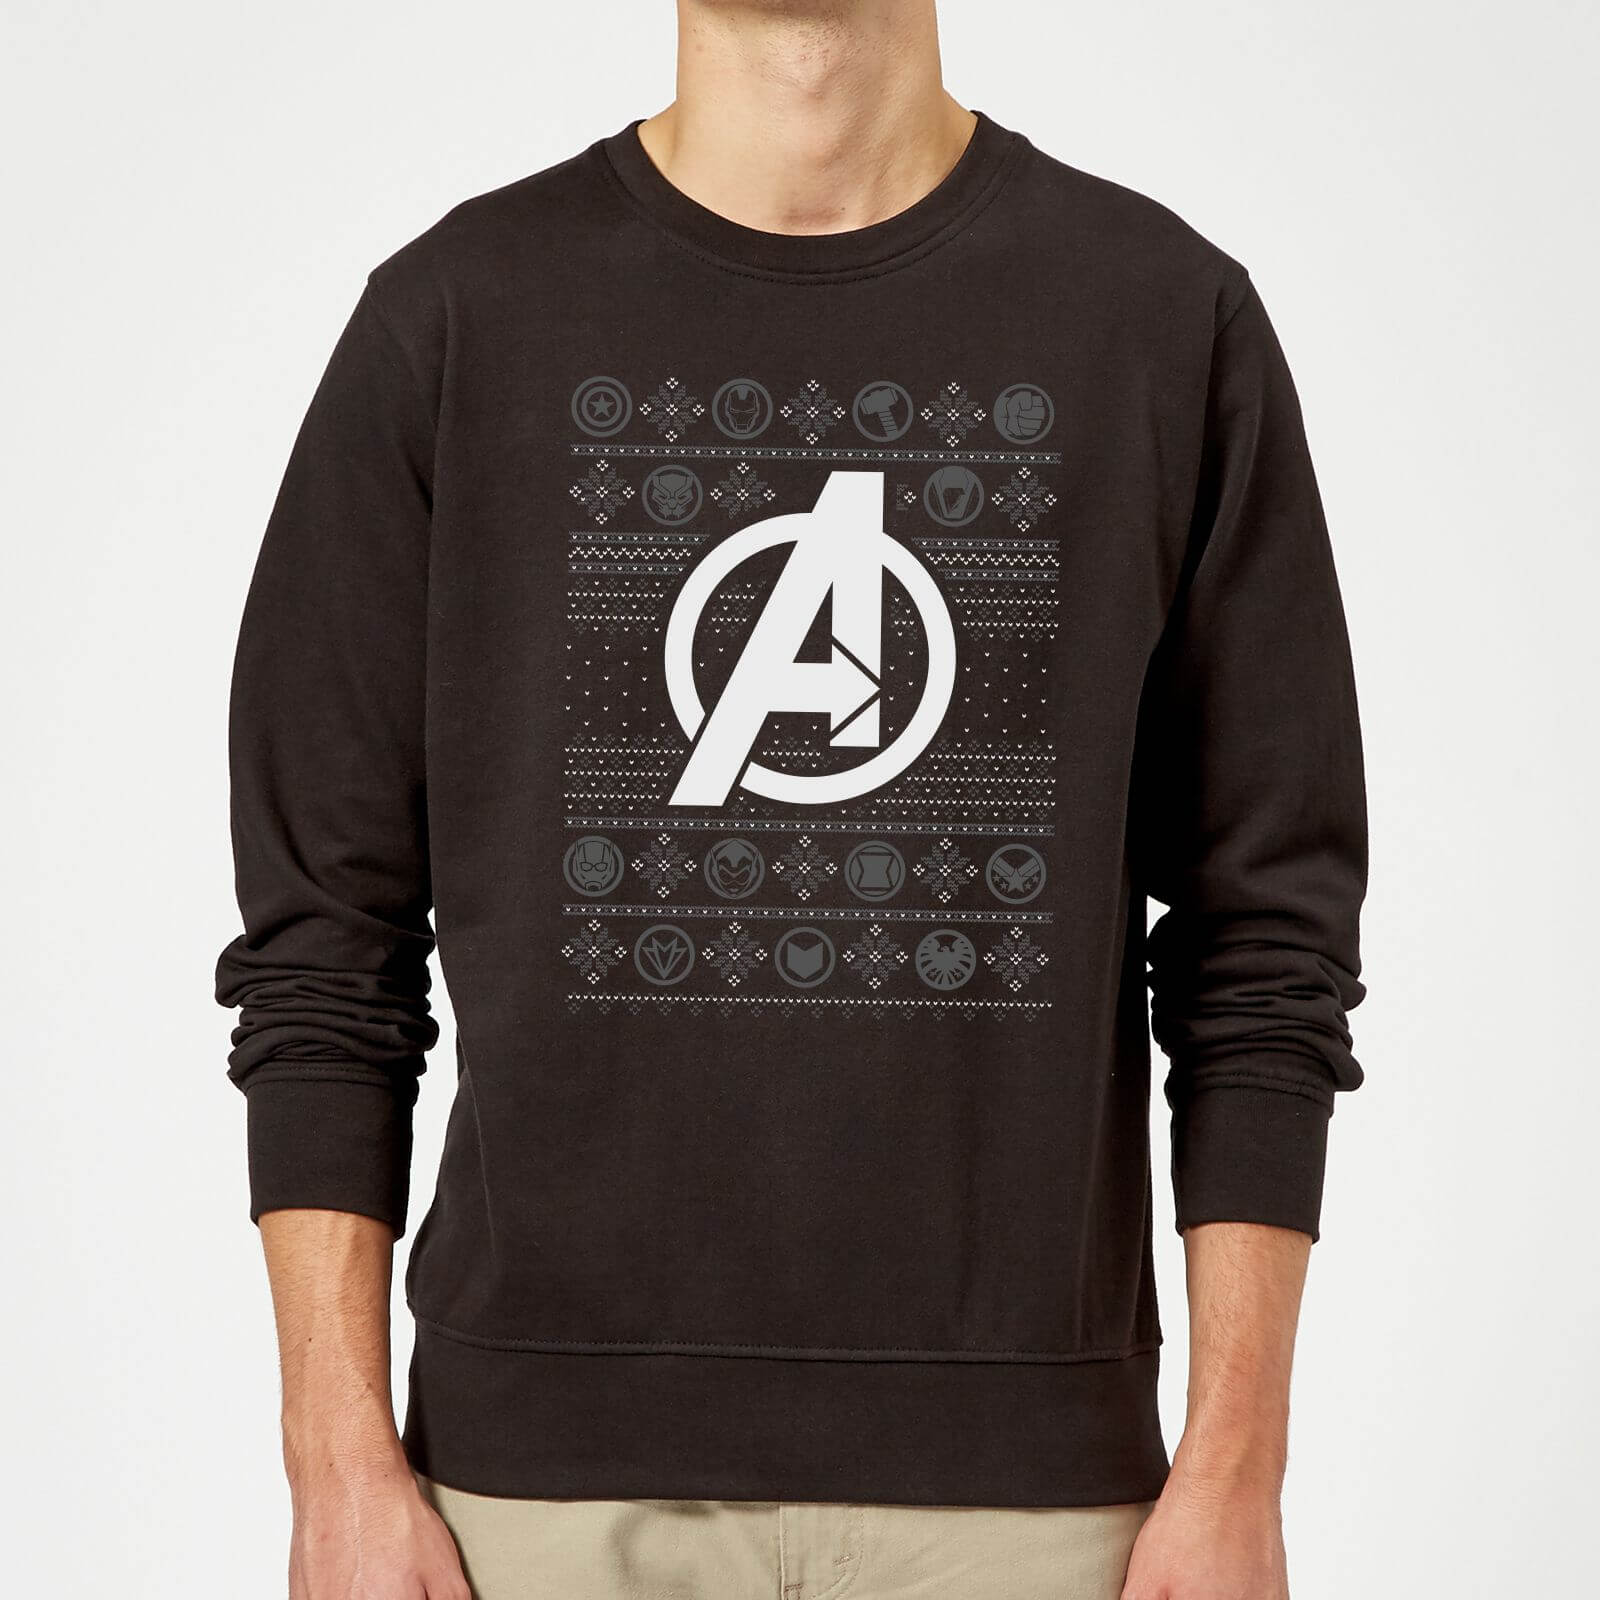 Marvel Avengers Logo Christmas Sweatshirt - Black - M